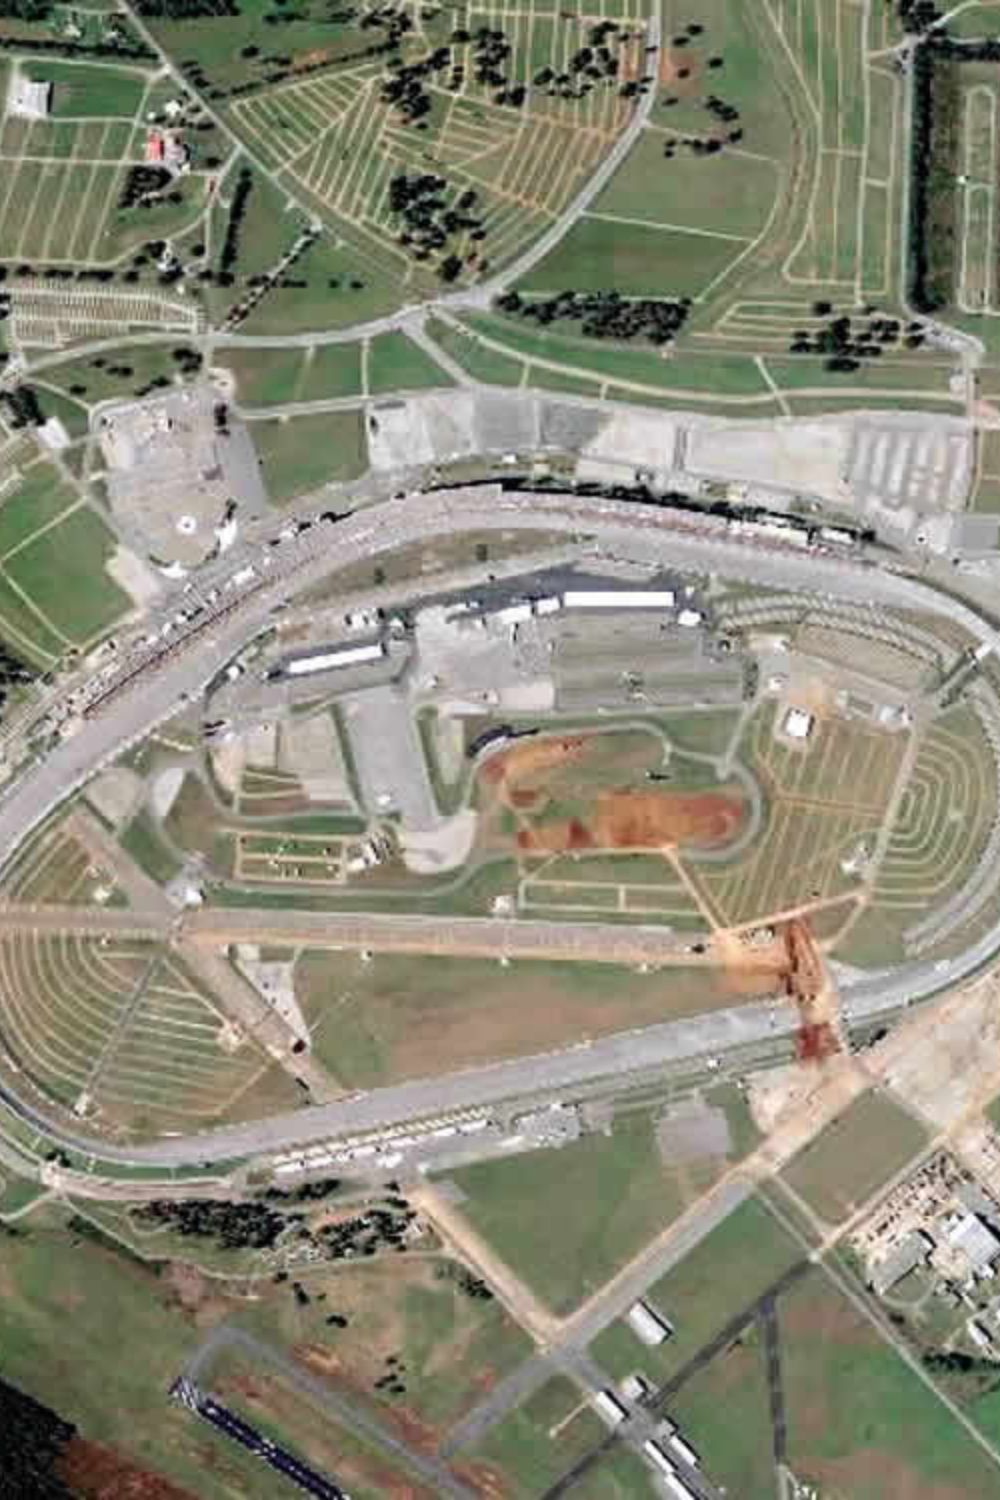 Talladega Superspeedway As The Lengthiest NASCAR Race Track